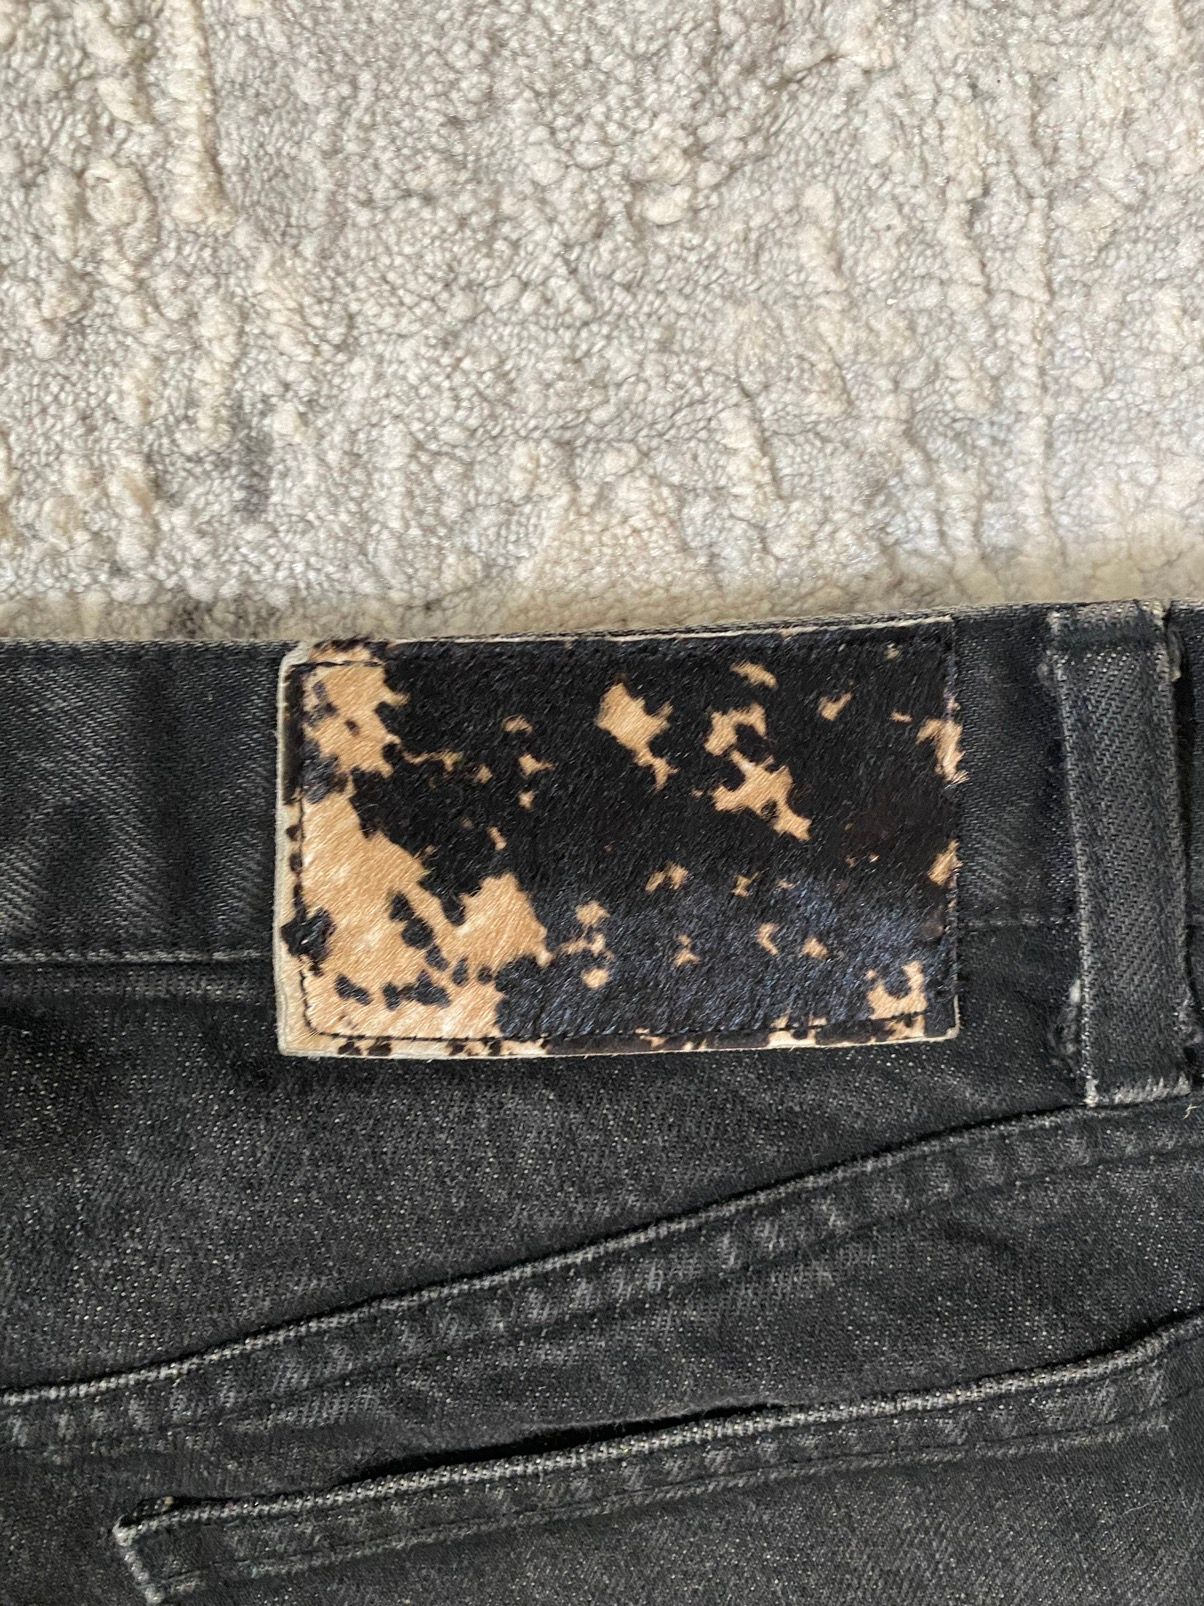 Shellac [SOLD]Shellac Faded Black Bootcut Jeans Size US 30 / EU 46 - 3 Thumbnail